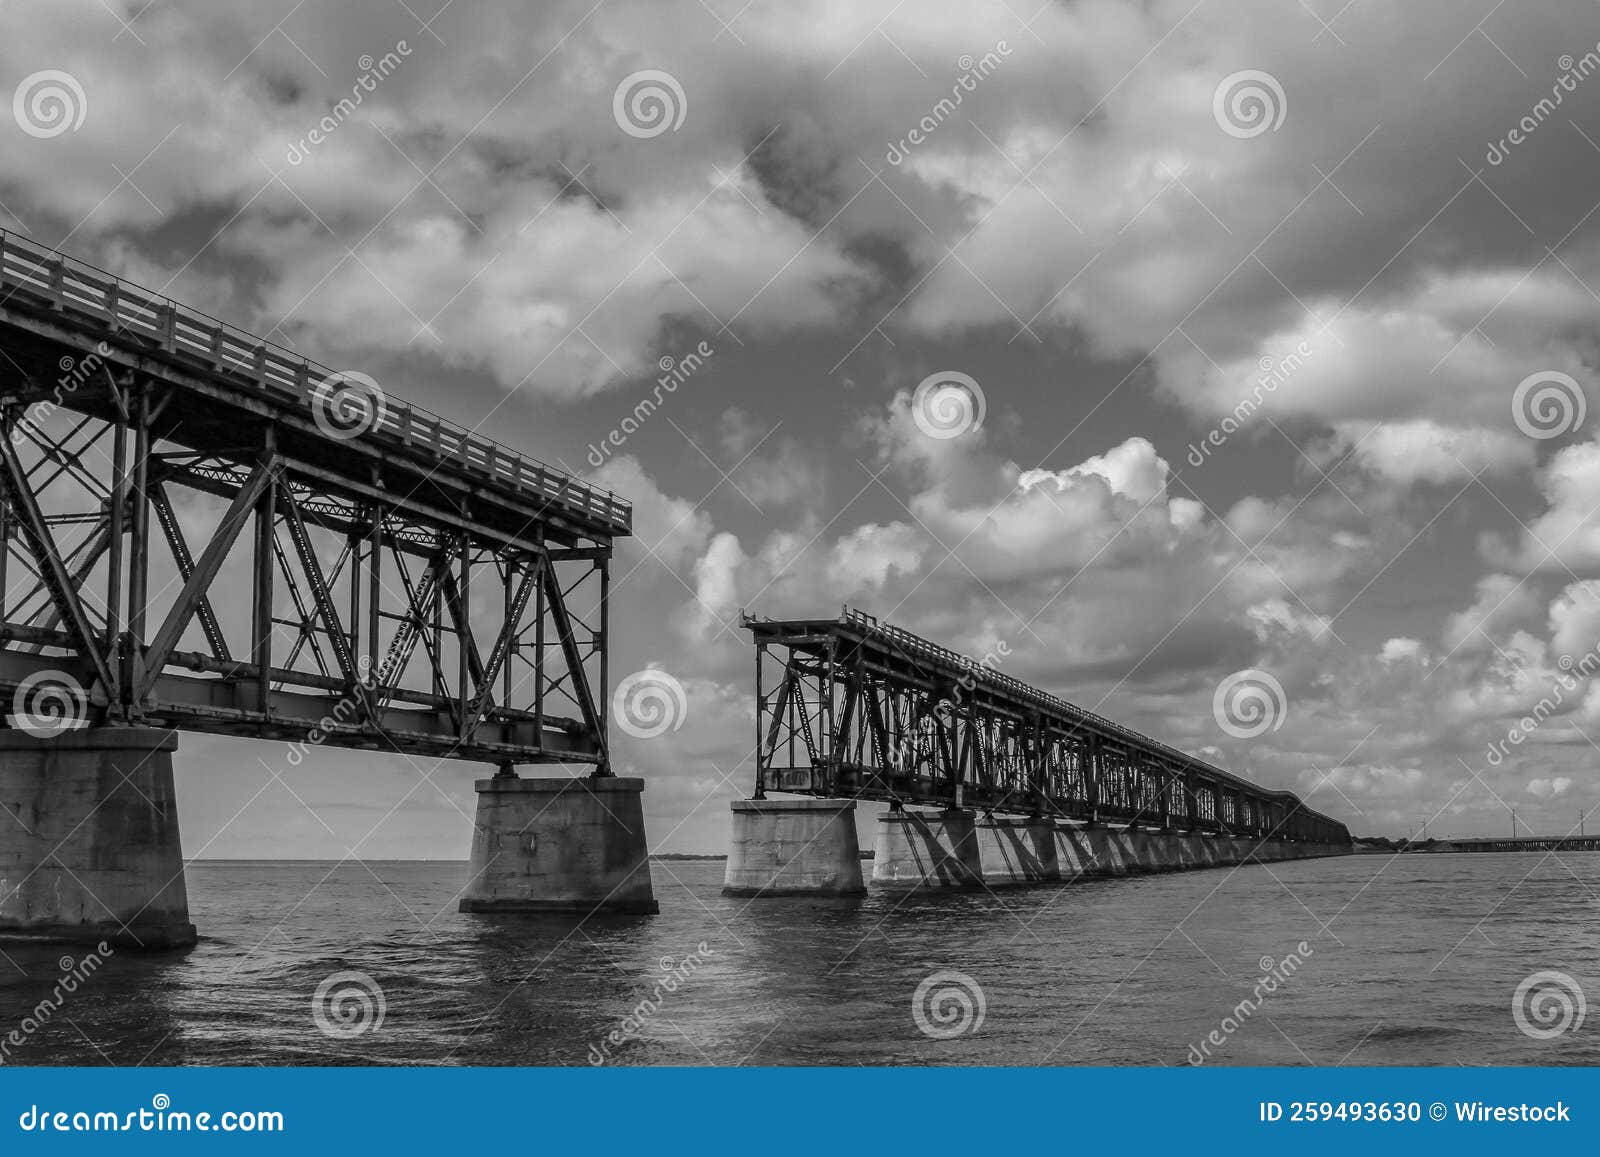 grayscale of a bridge in maraton, keys island, florida under a cloudy sky